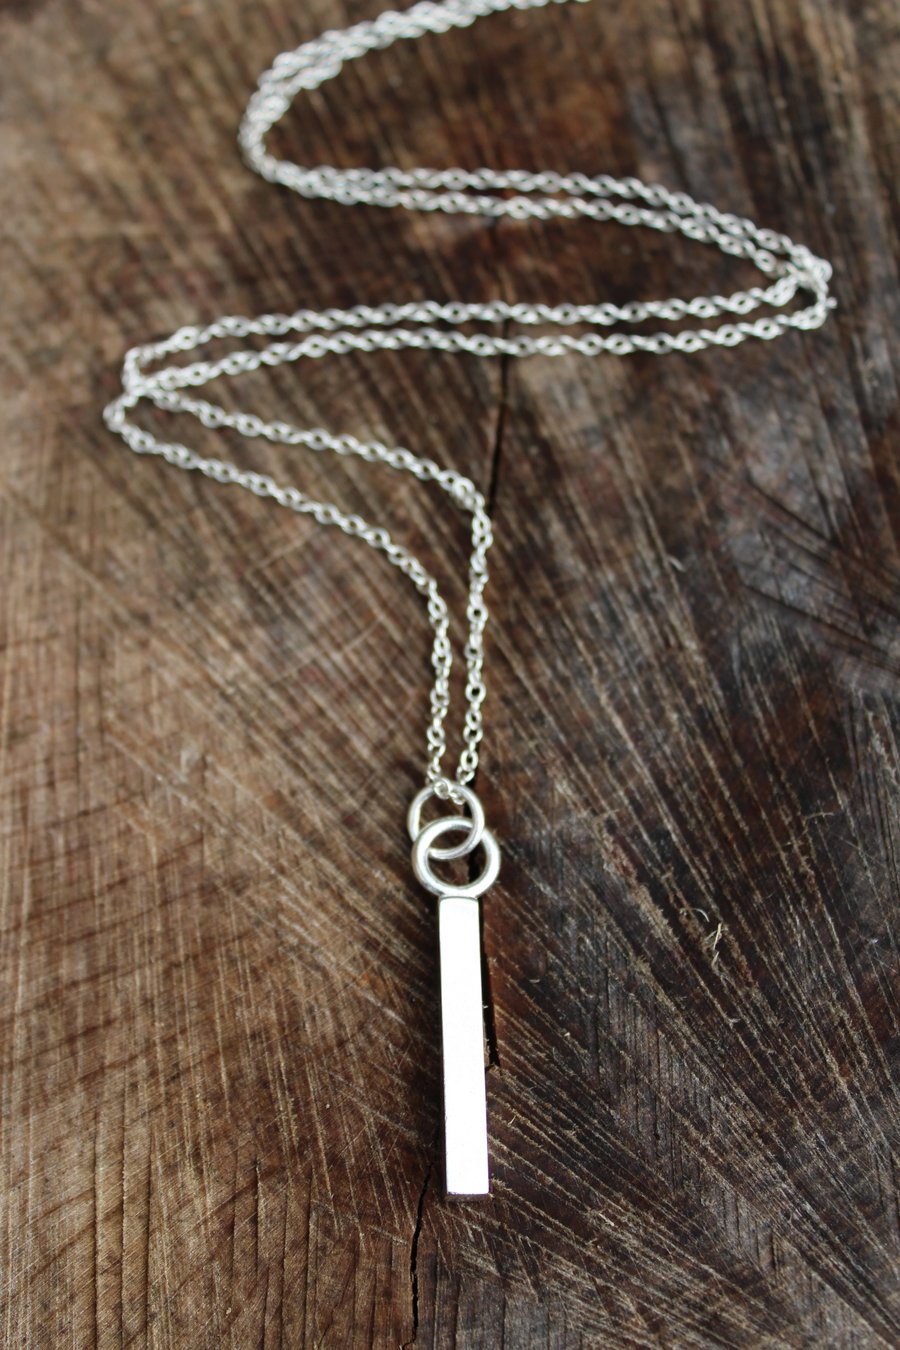 Long silver bar necklace